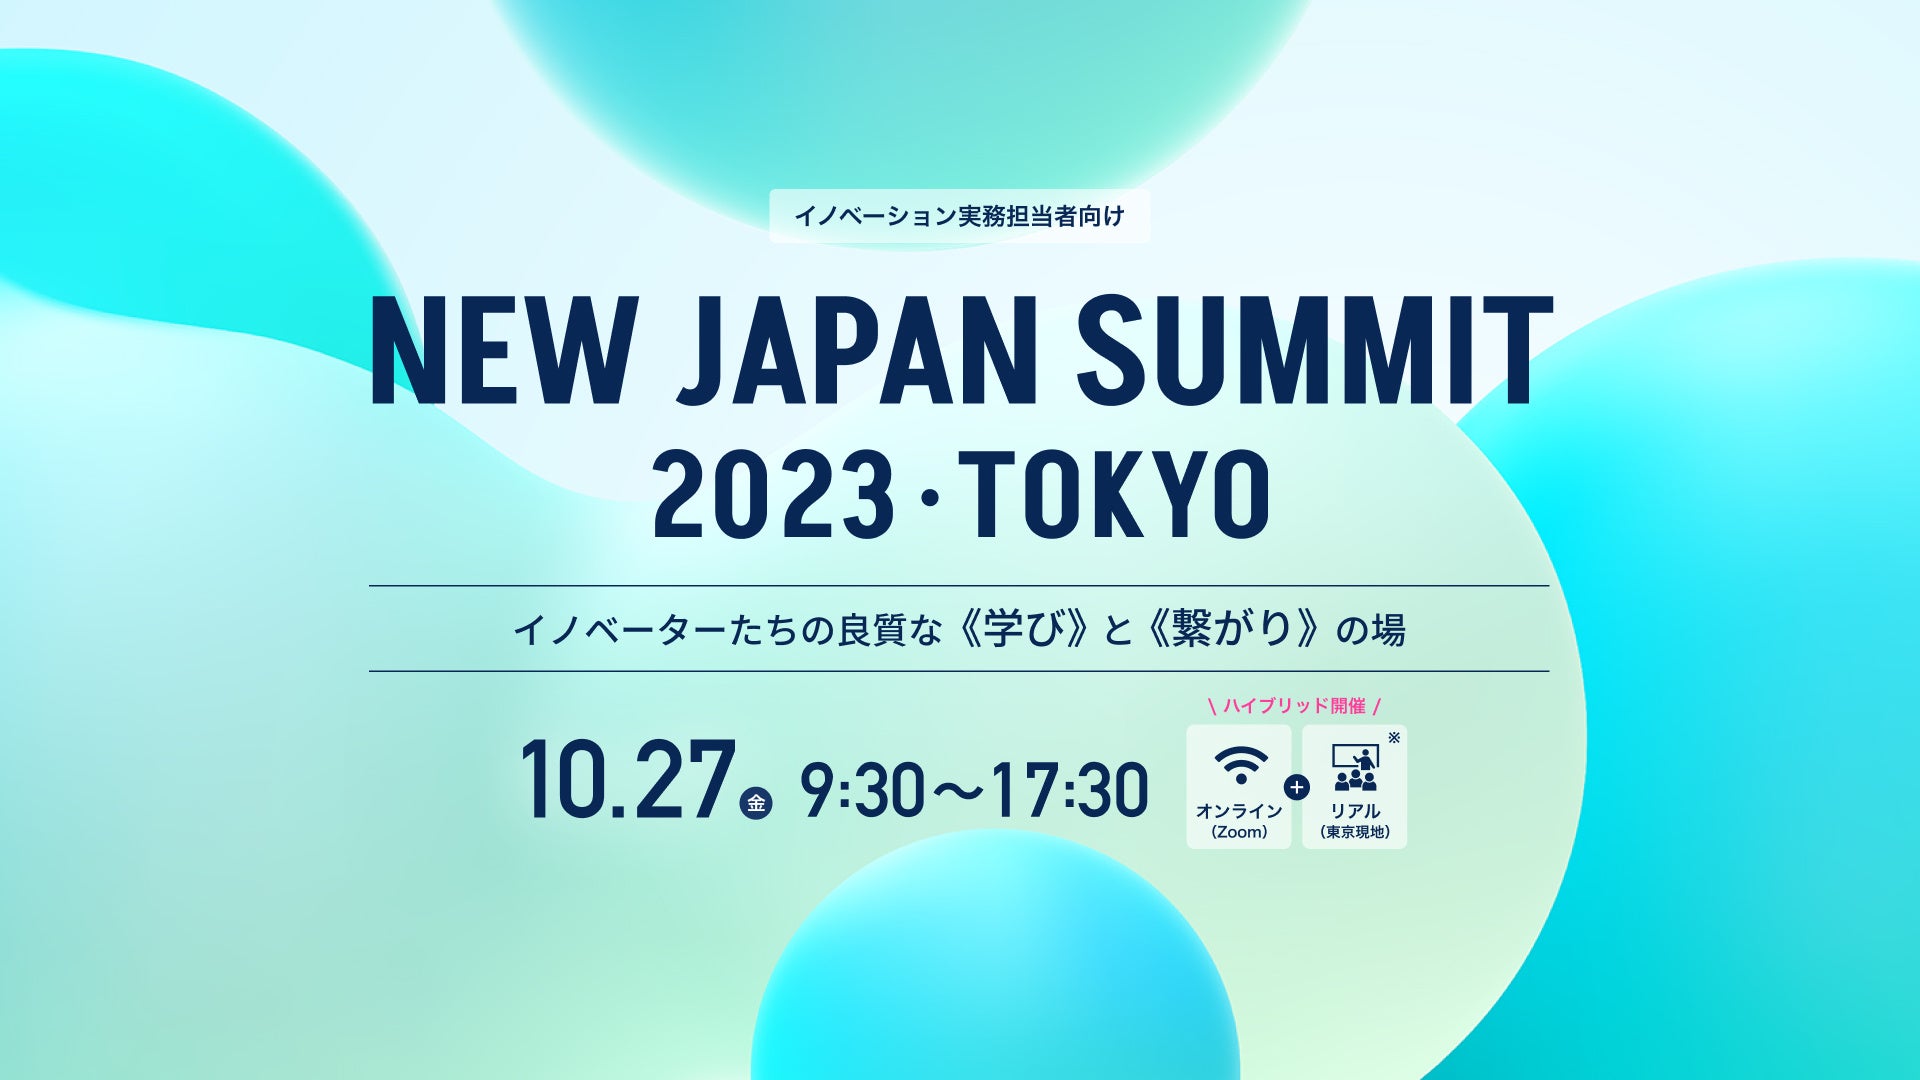 yJÕ񍐁zCmx[^[̗ǎȁswсtƁsqt̏uNEW JAPAN SUMMIT 2023 TOKYOv